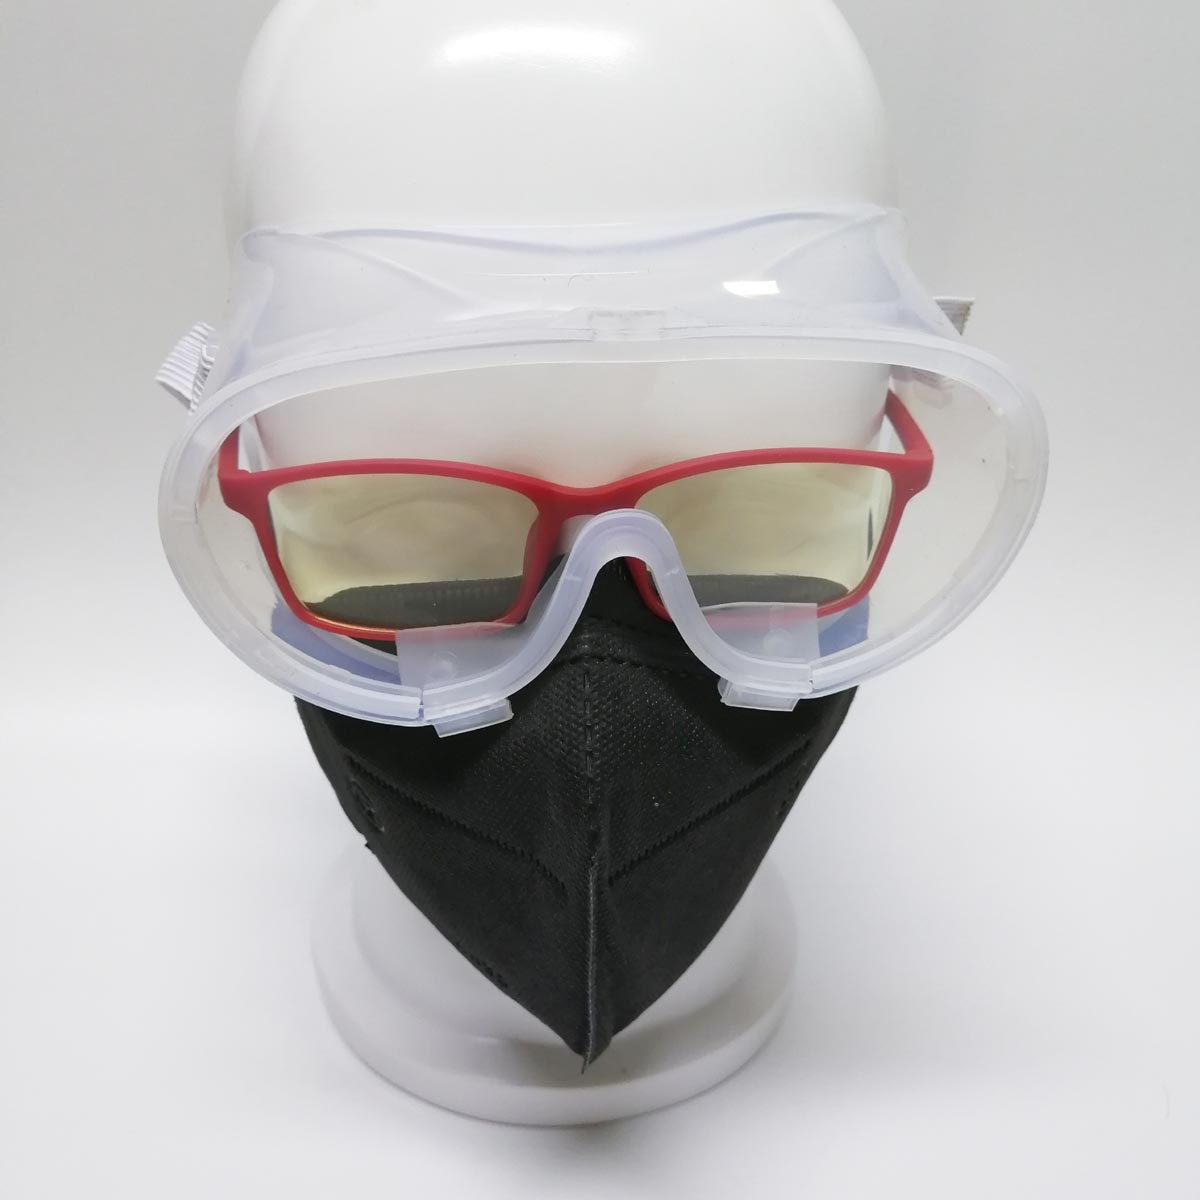 Protective goggles 2.jpg